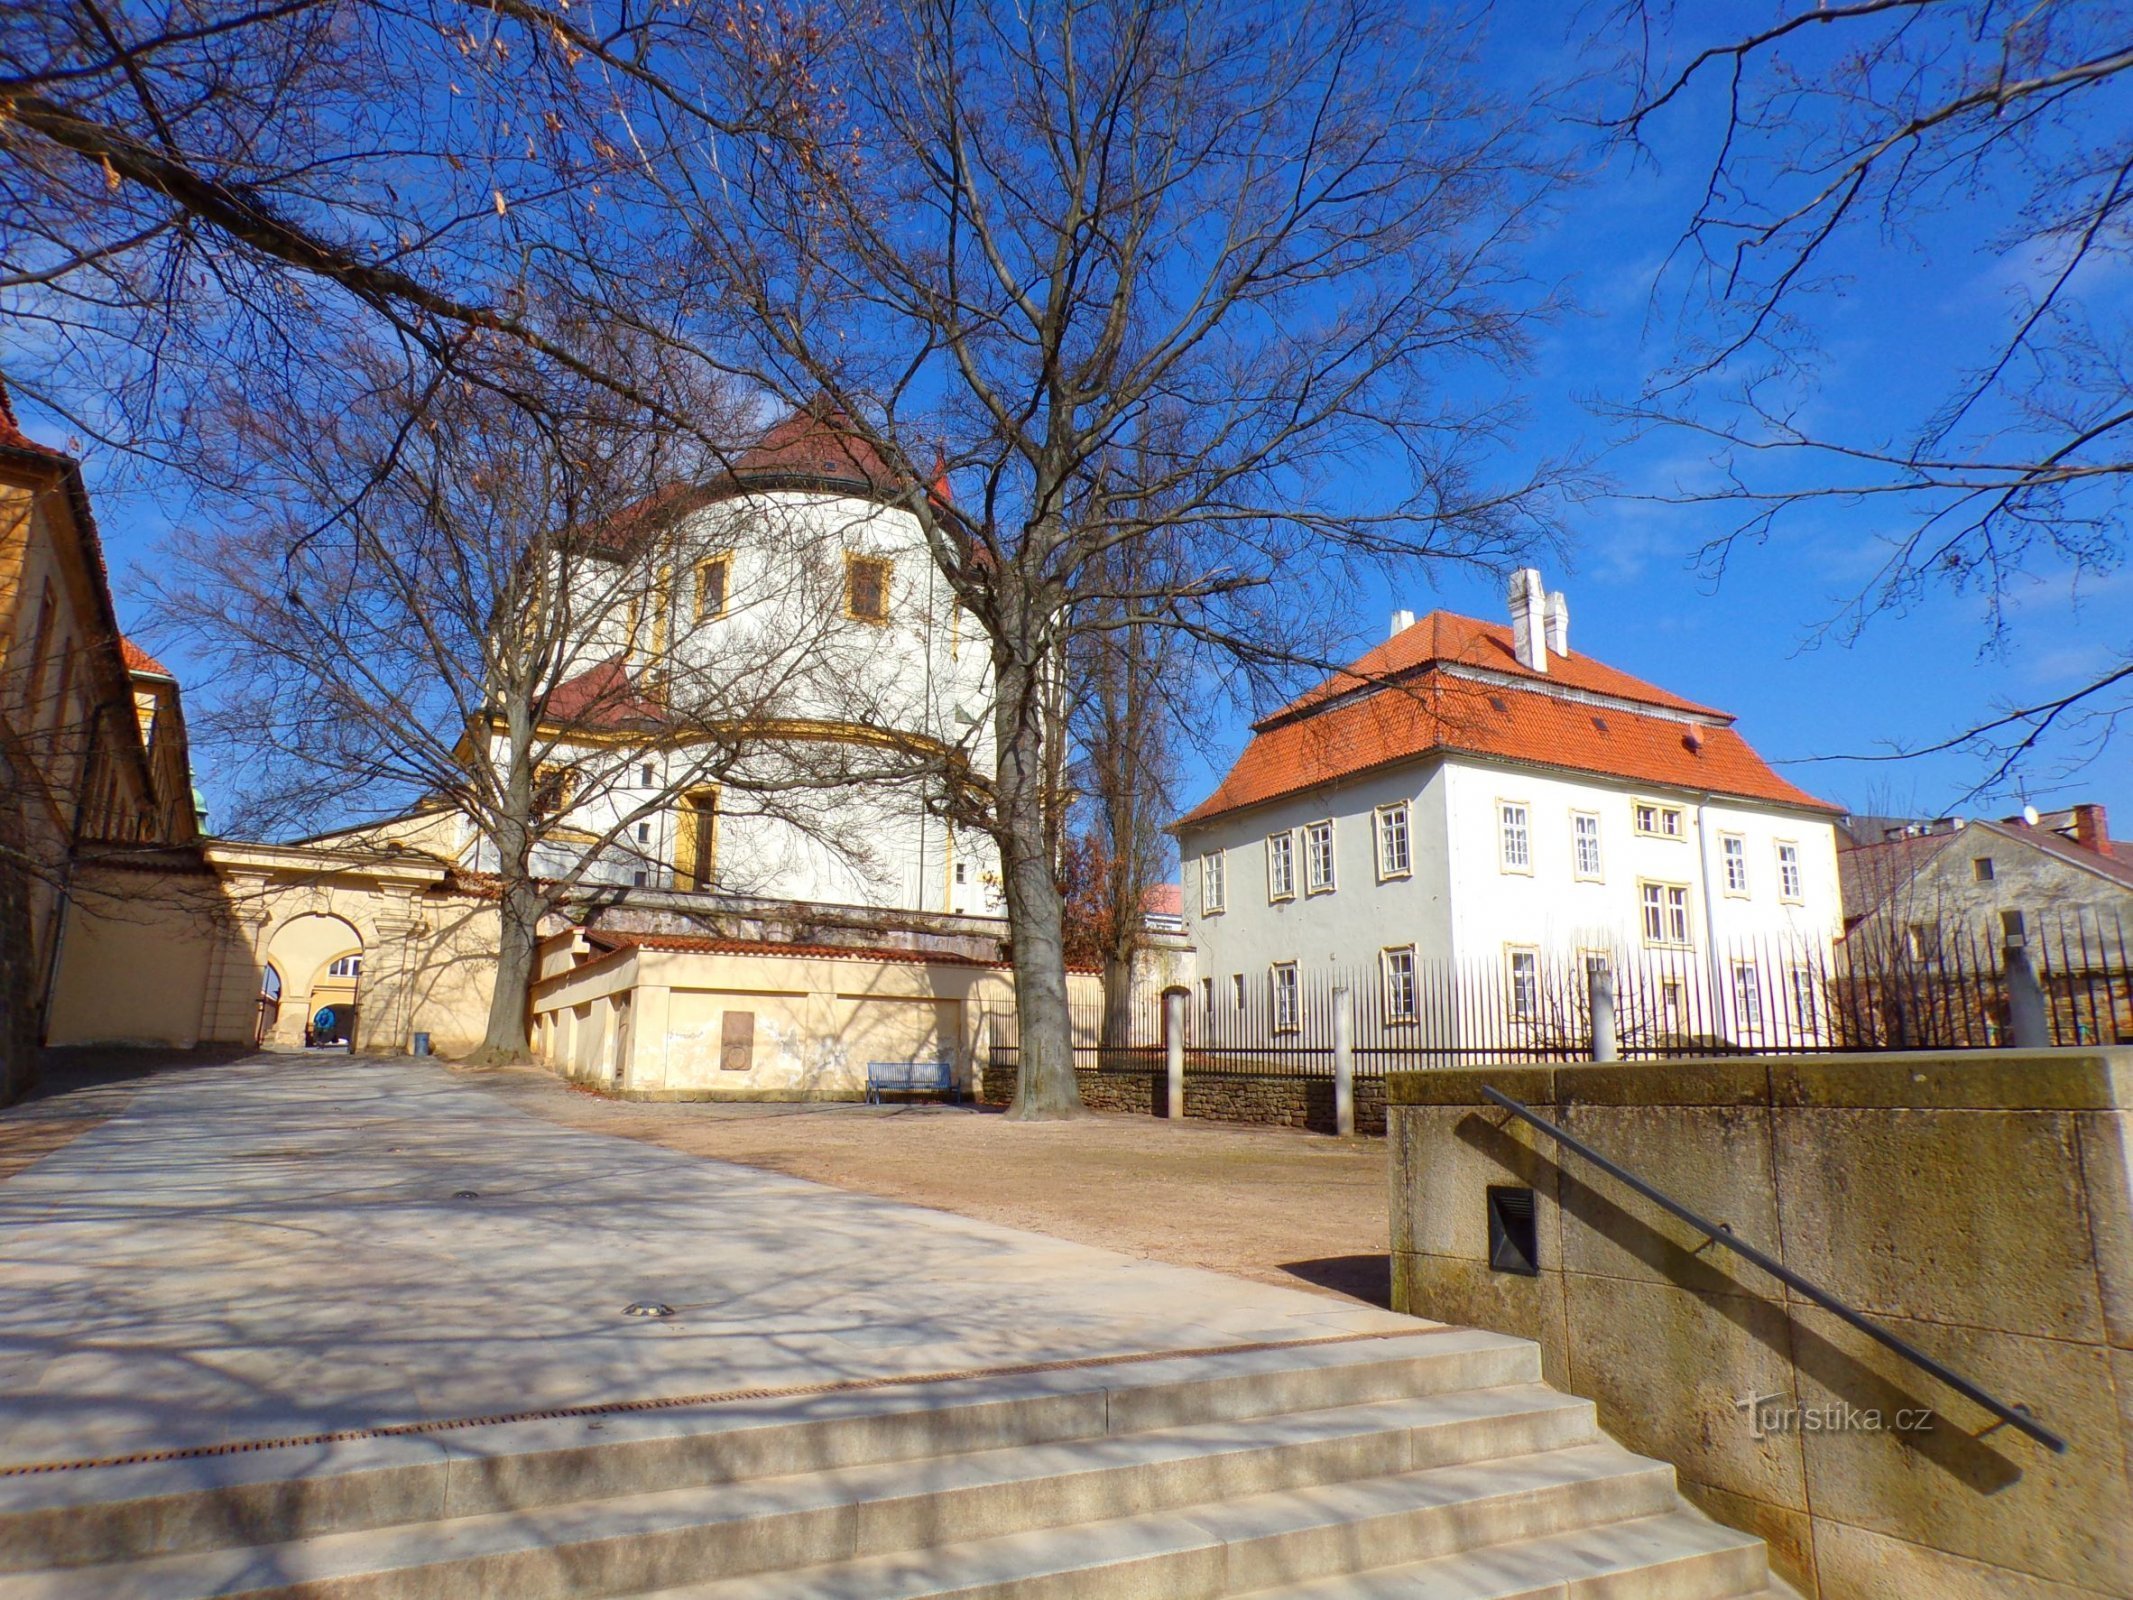 Cerkev sv. Jakoba Večjega in naddekanat (Jičín, 3.3.2022. XNUMX. XNUMX)